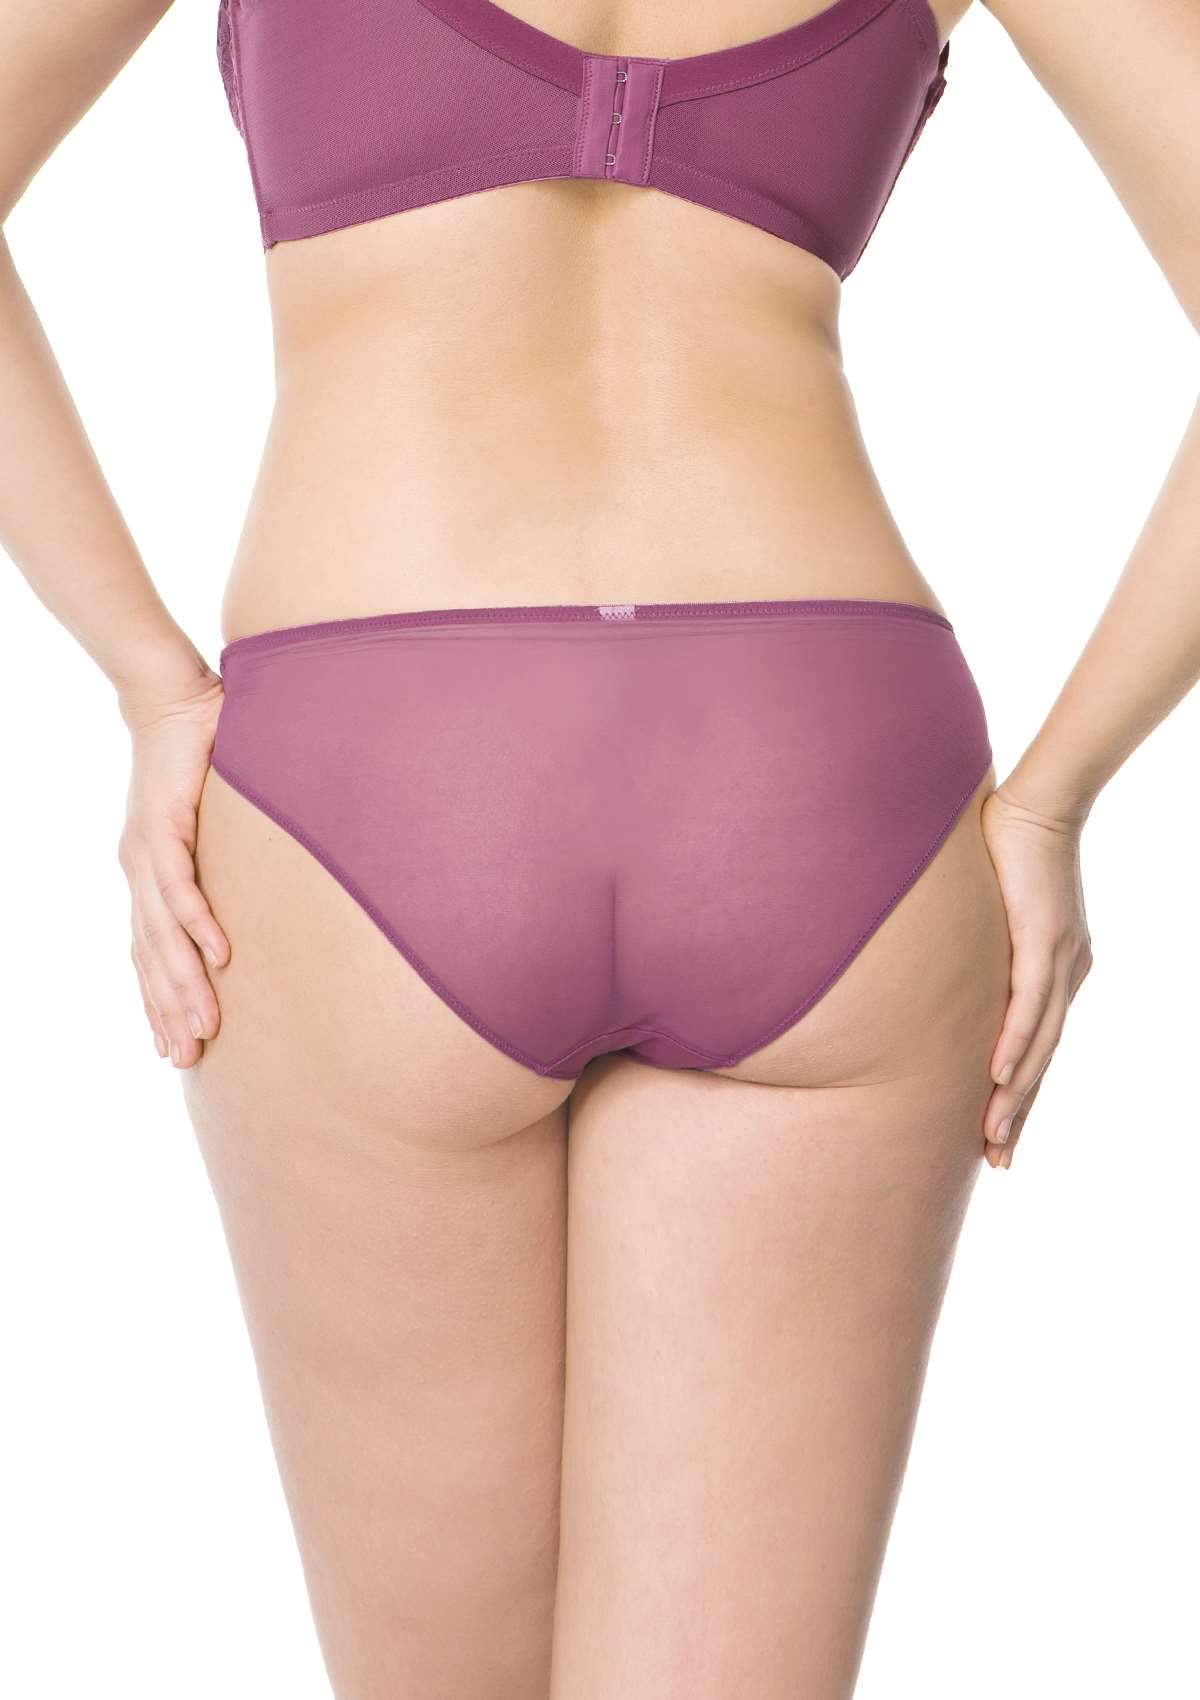 HSIA Peony Lace Mesh Everyday Bikini Underwear 3 Pack - S / Light Coral+Green+Purple